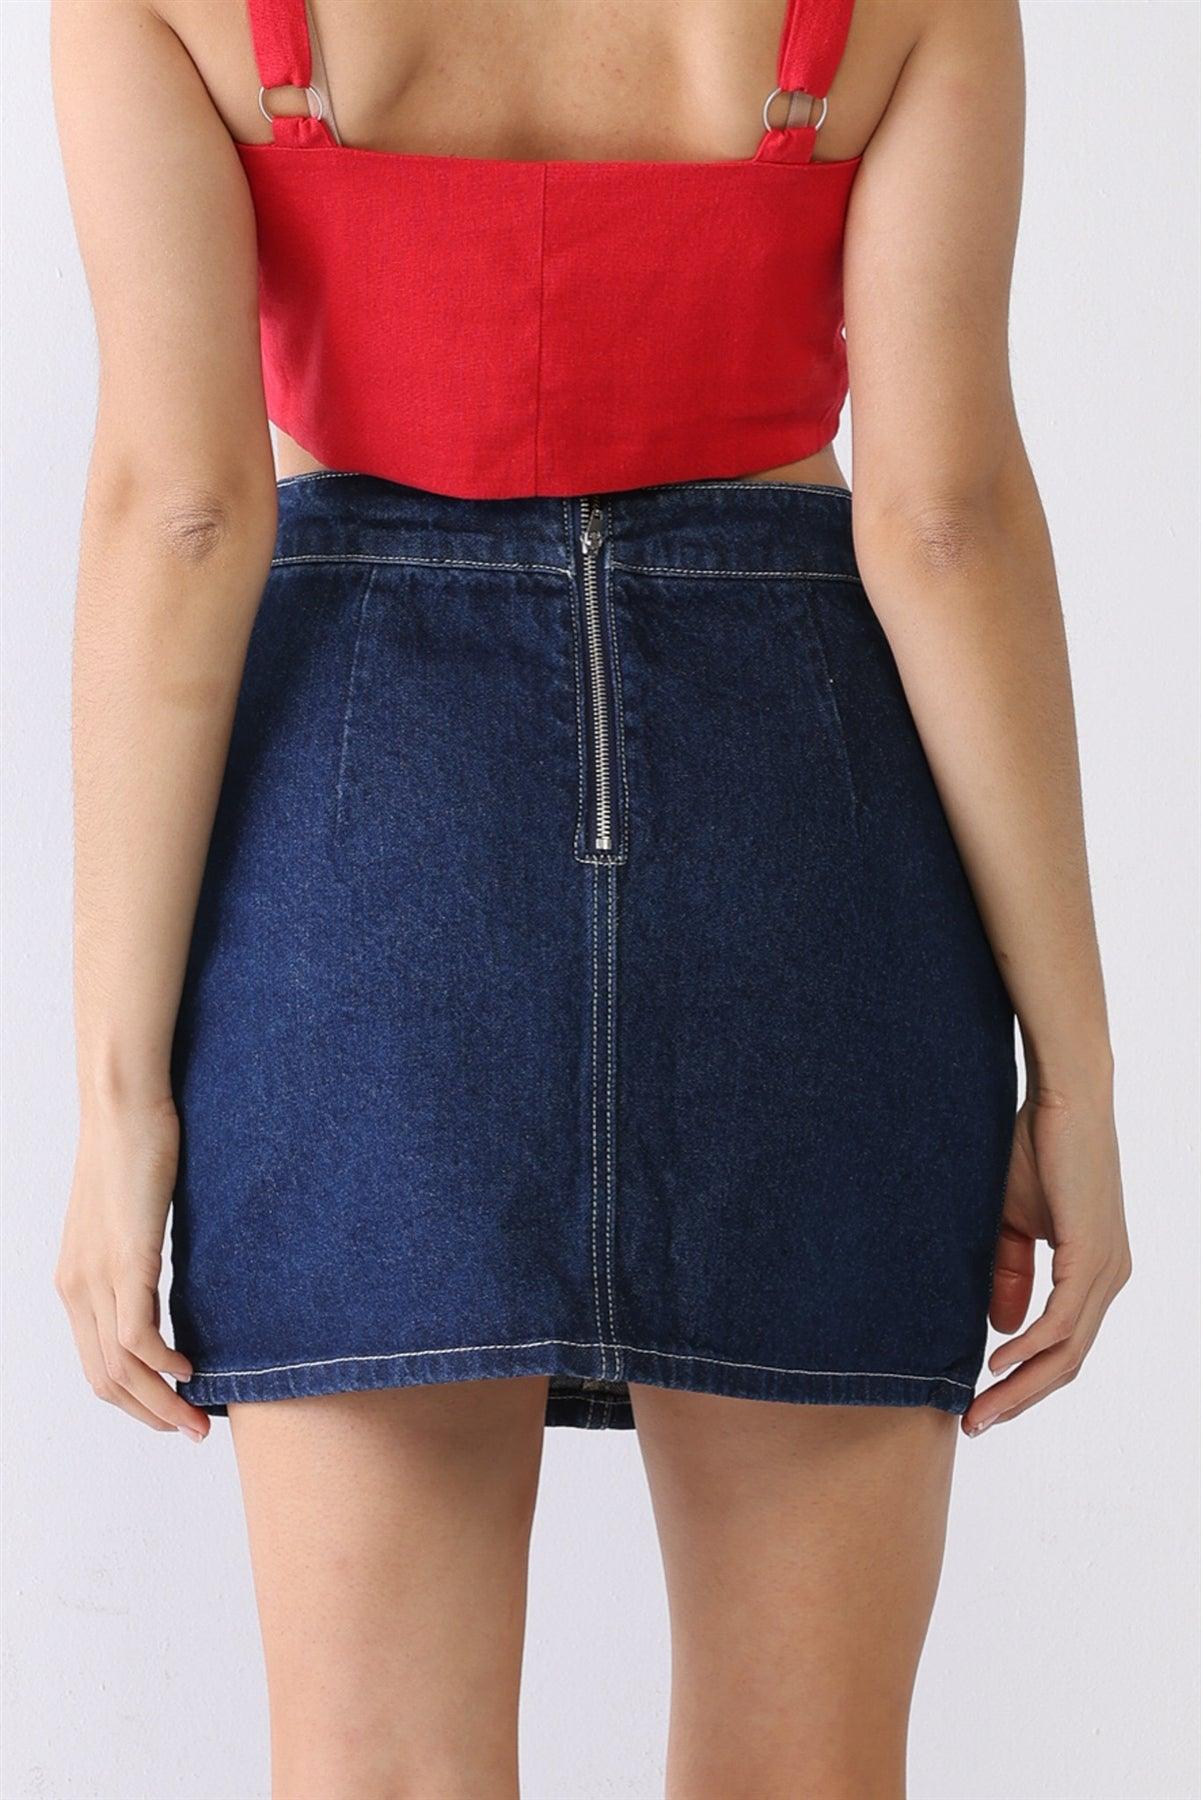 Indigo Denim Cotton Cut-Out Detail High Waist Mini Skirt /3-2-1